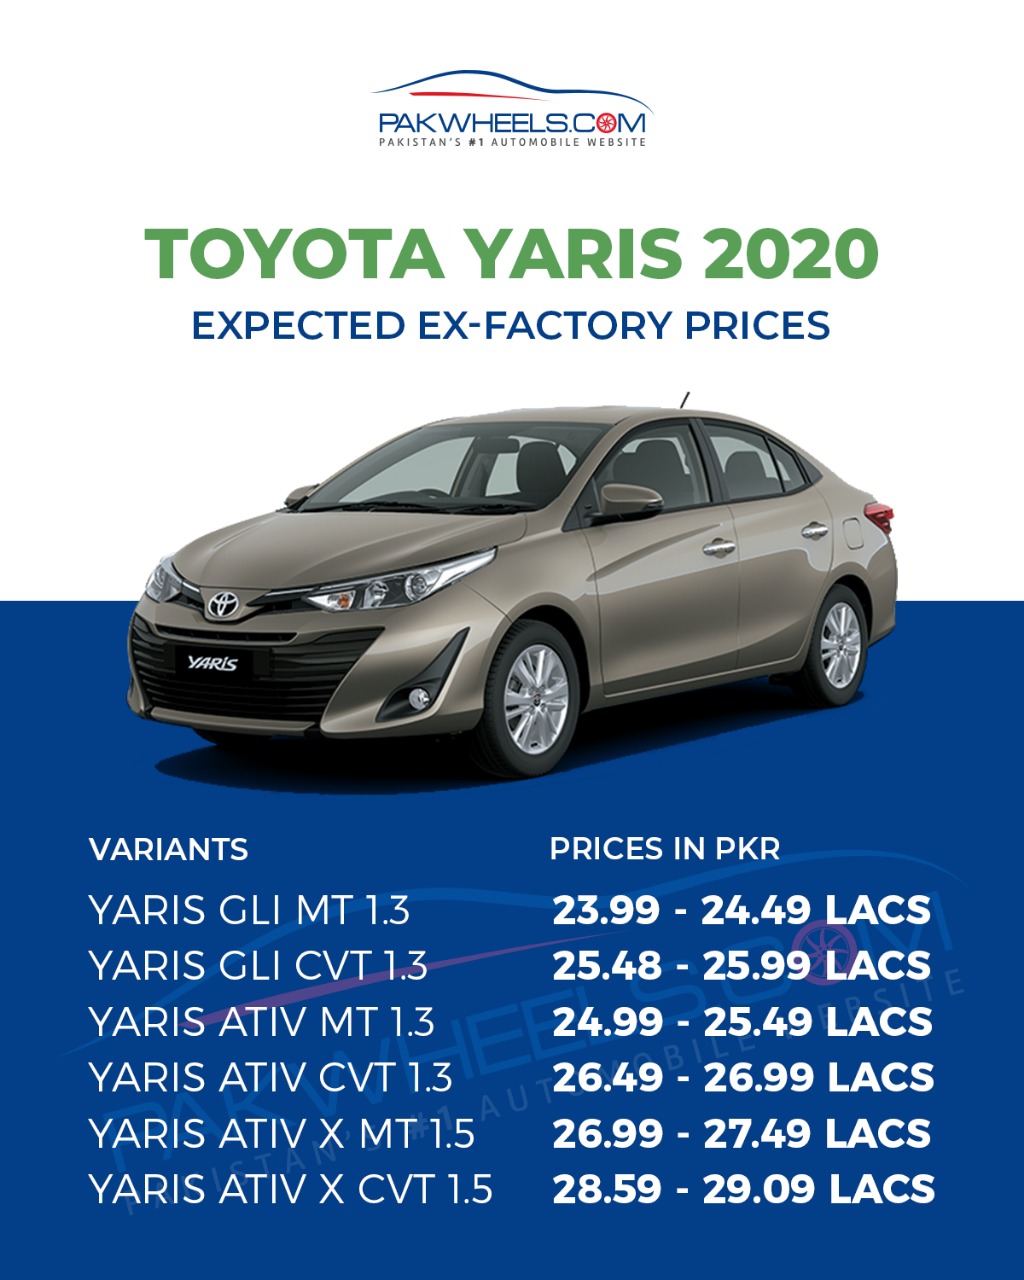 Toyota Yaris Price And Other Details Revealed Pakwheels Blog